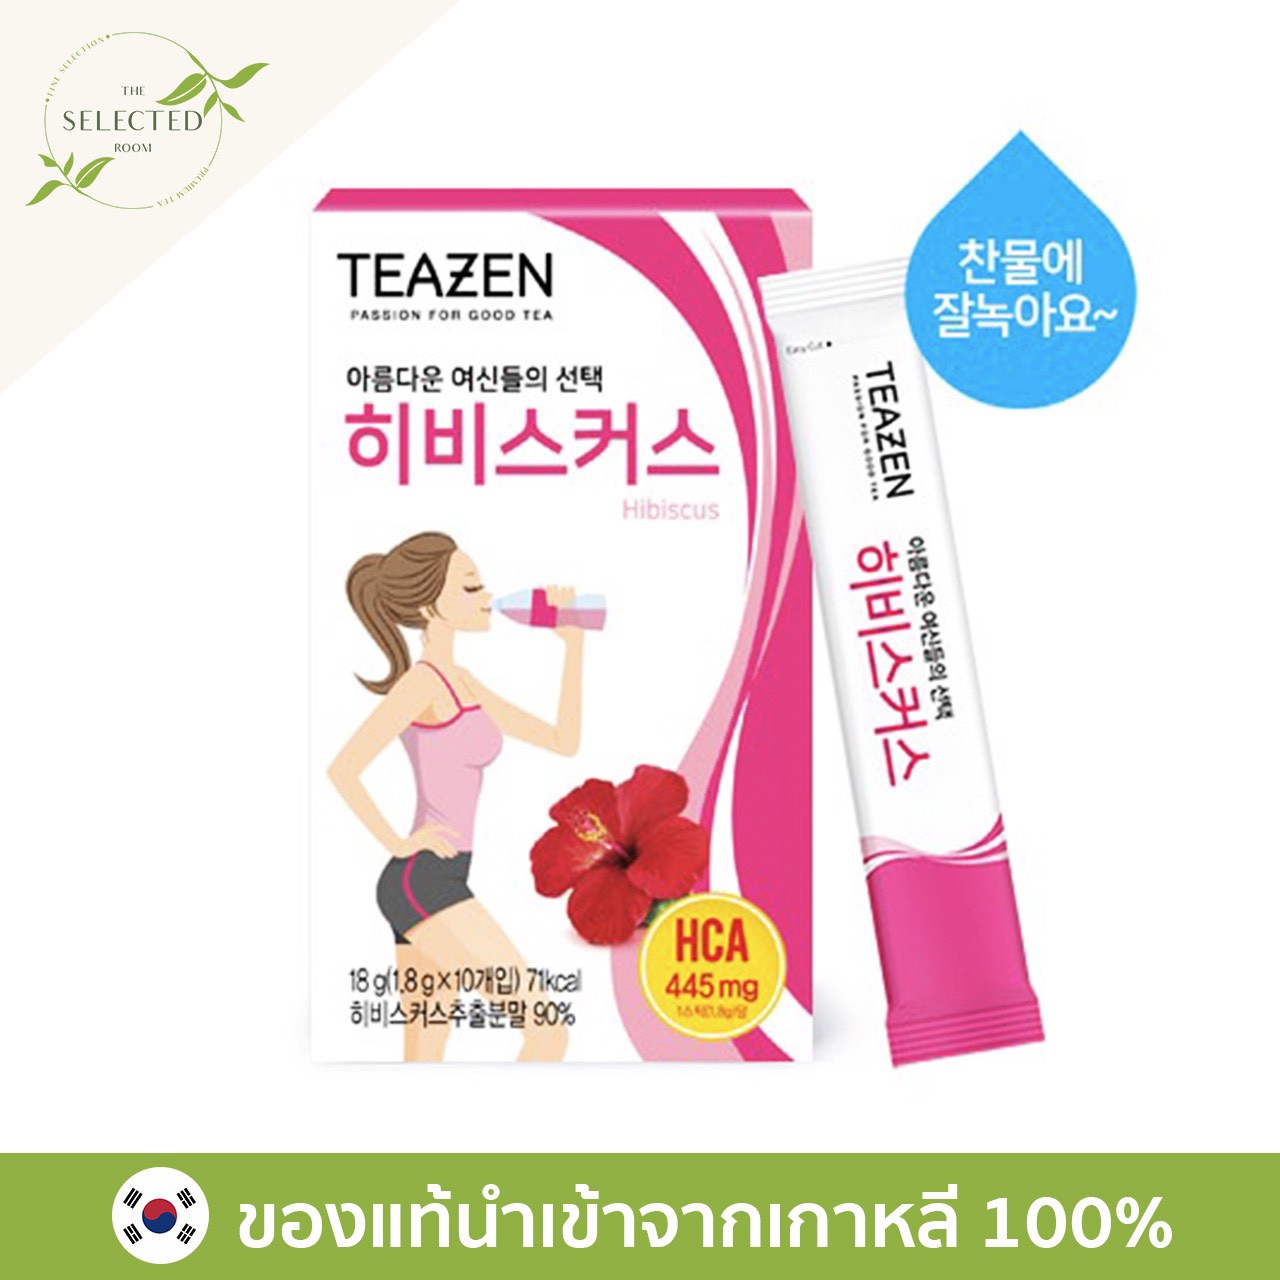 ?Teazen Hibiscus Water Mix? HIT มาใหม่ ทีเซ็น ชาดอกชบา ช่วยย่อย ช่วยดีท็อก ควบคุมน้ำหนัก ชาทีเซ็น ของแท้ ชาเกาหลี